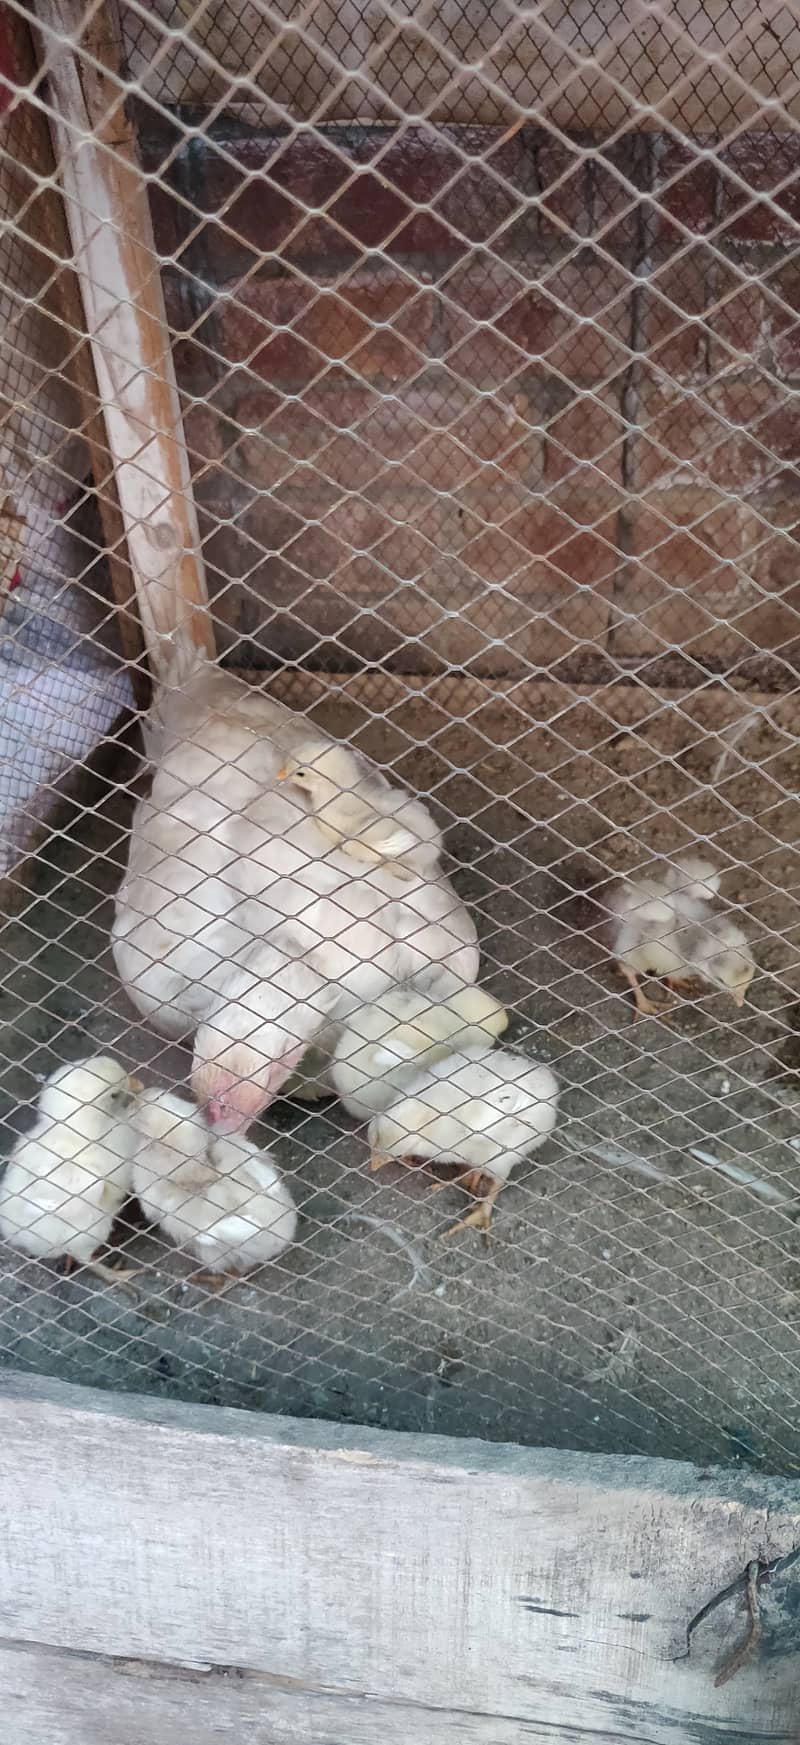 Heera chicks for sale price 1500 per chick 1